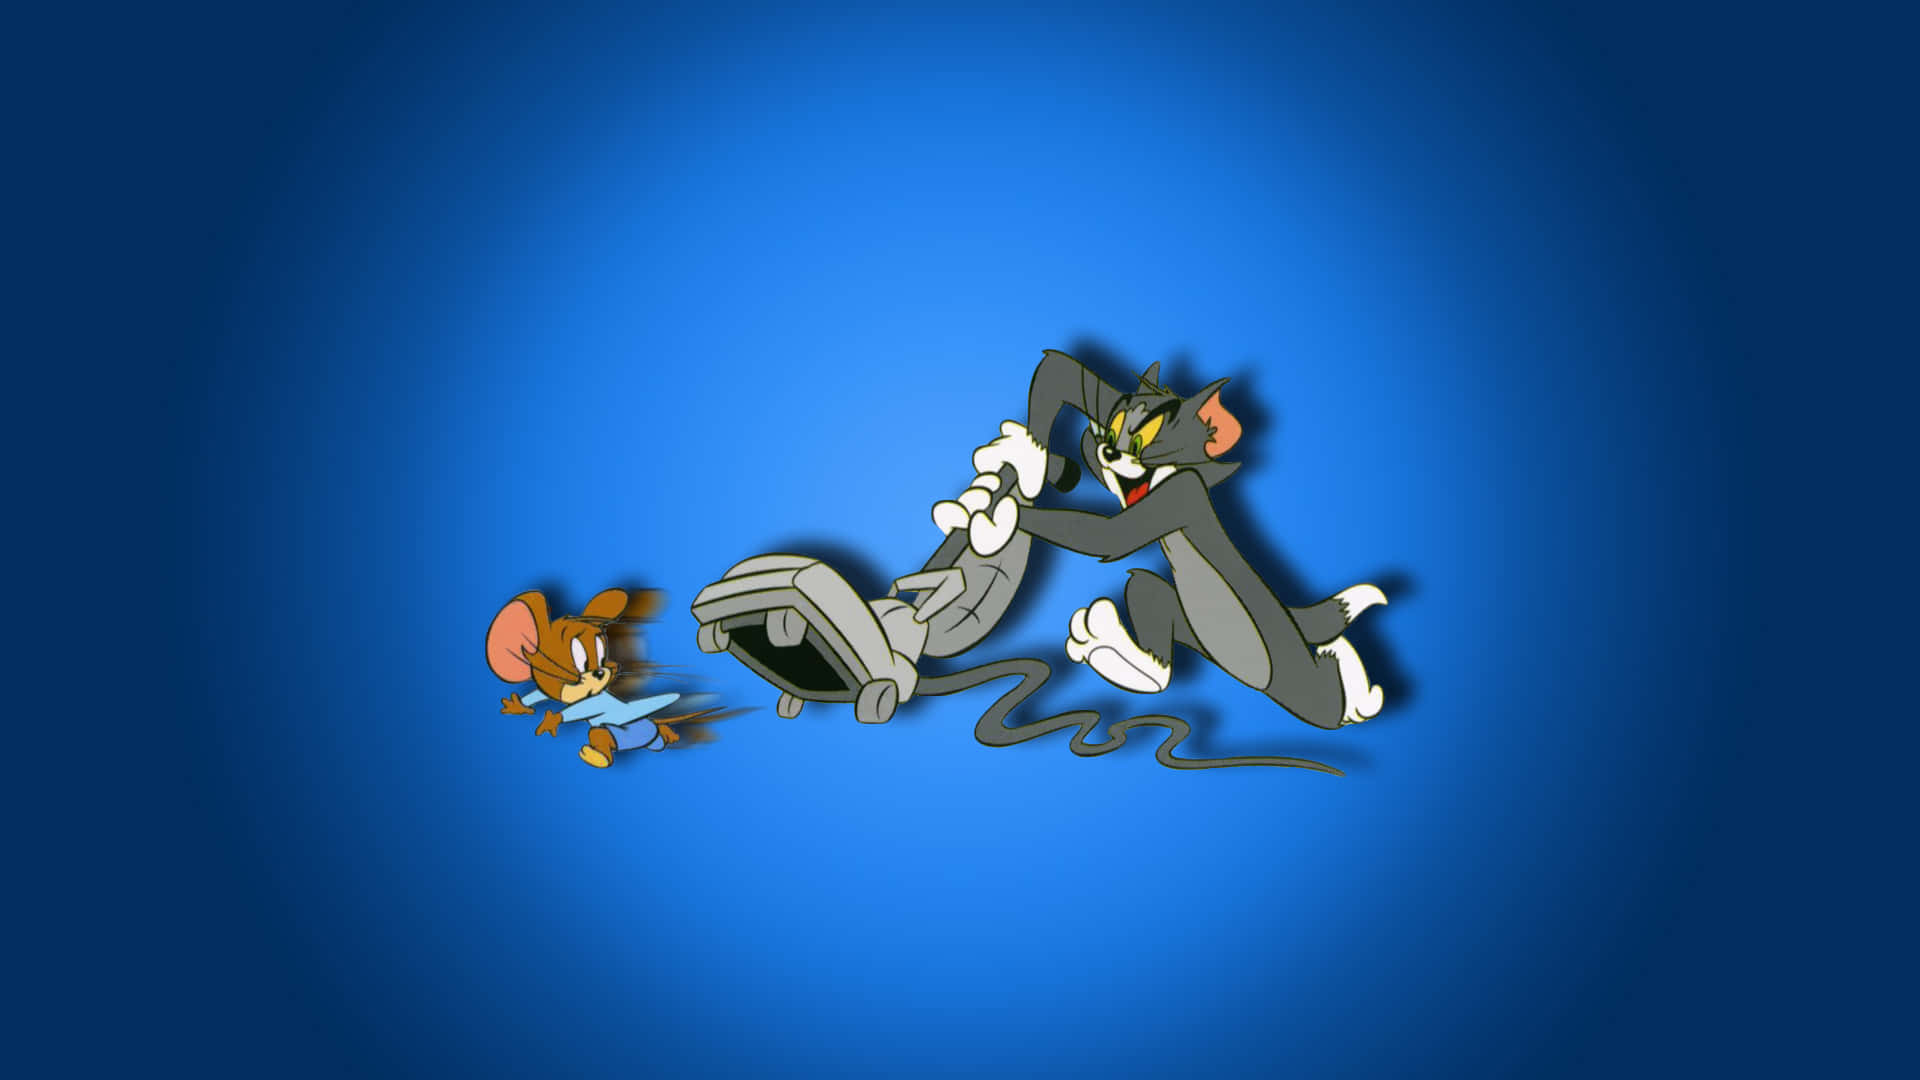 Tom og Jerry forårsager sammen chaos. Wallpaper